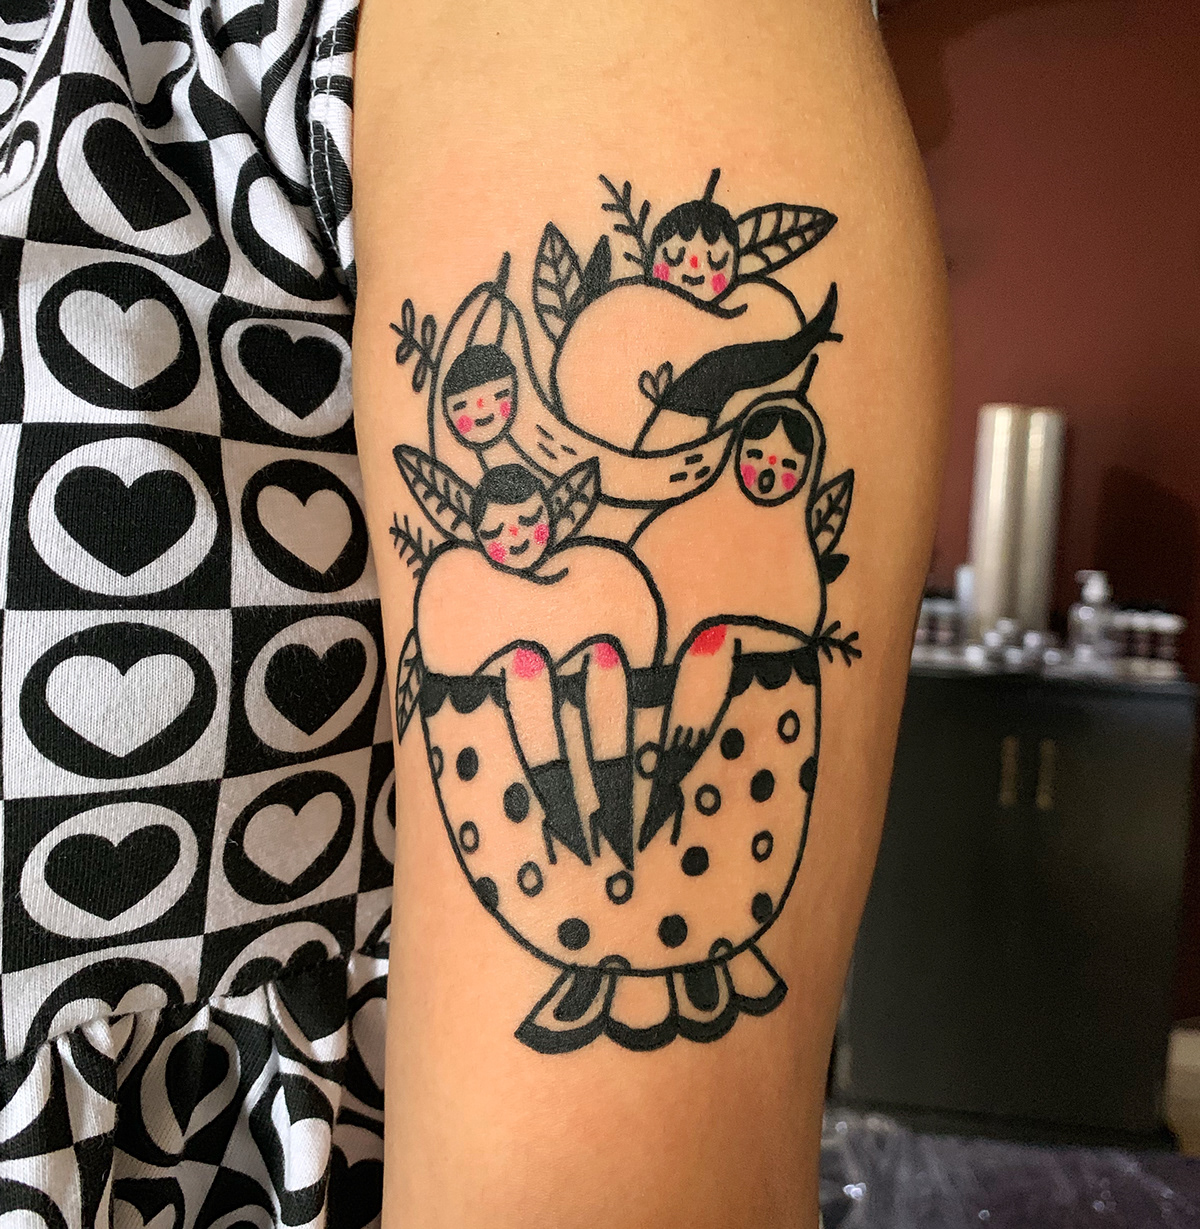 El Salvador tattoo floral bird Fruit women feminist